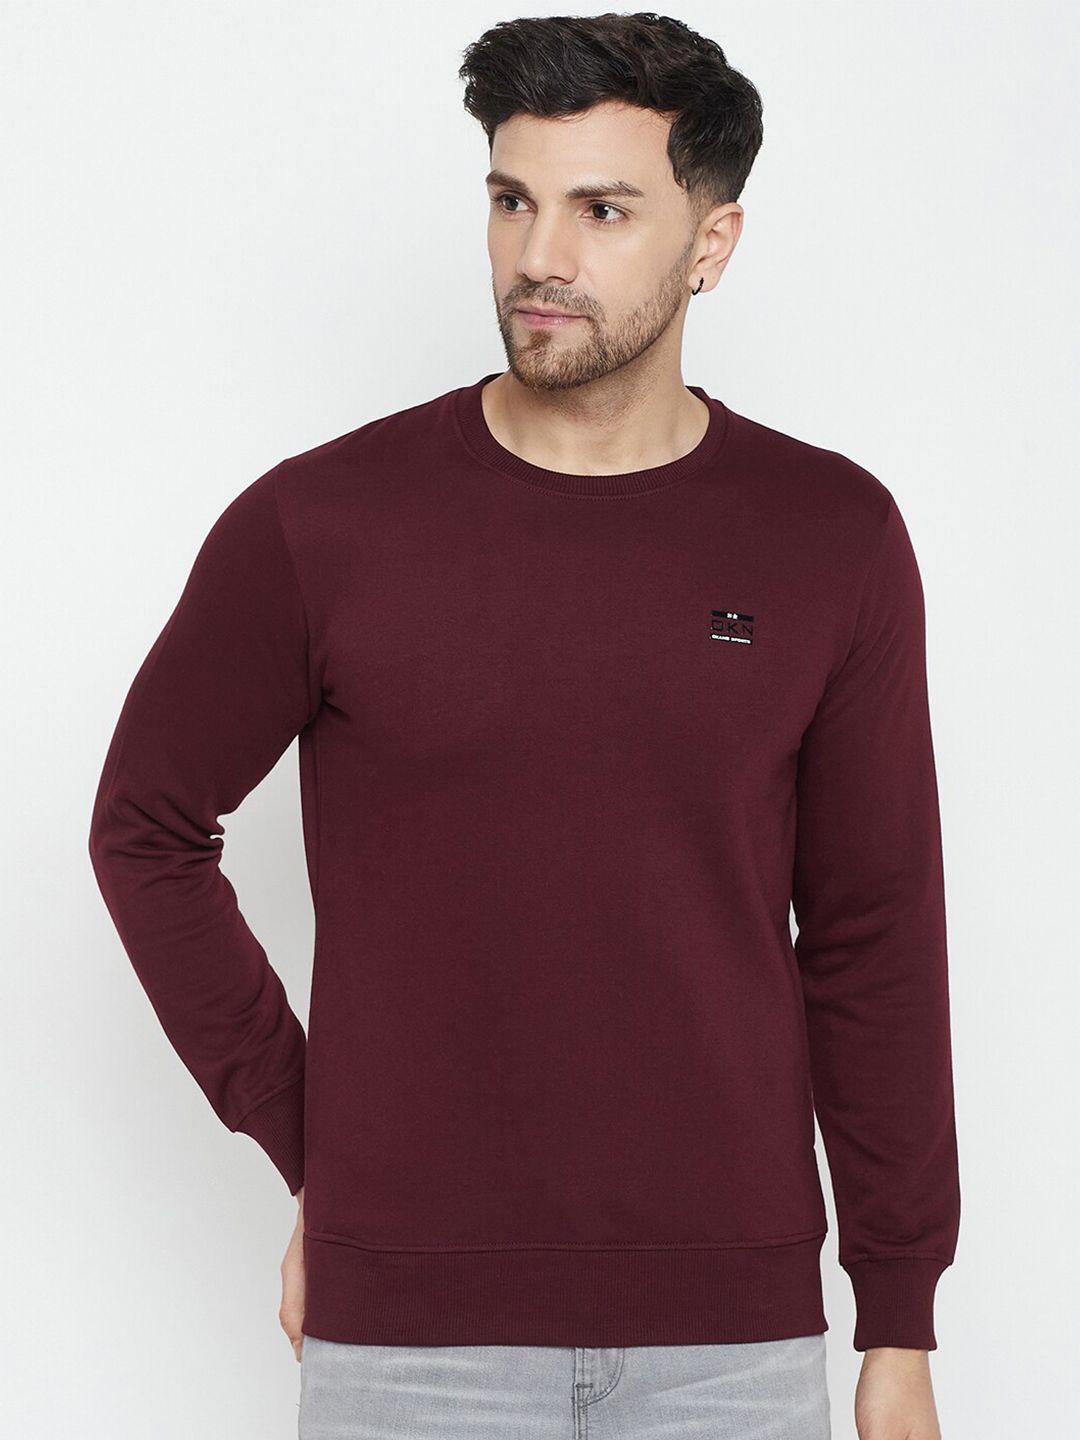 okane-round-neck-cotton-sweatshirt